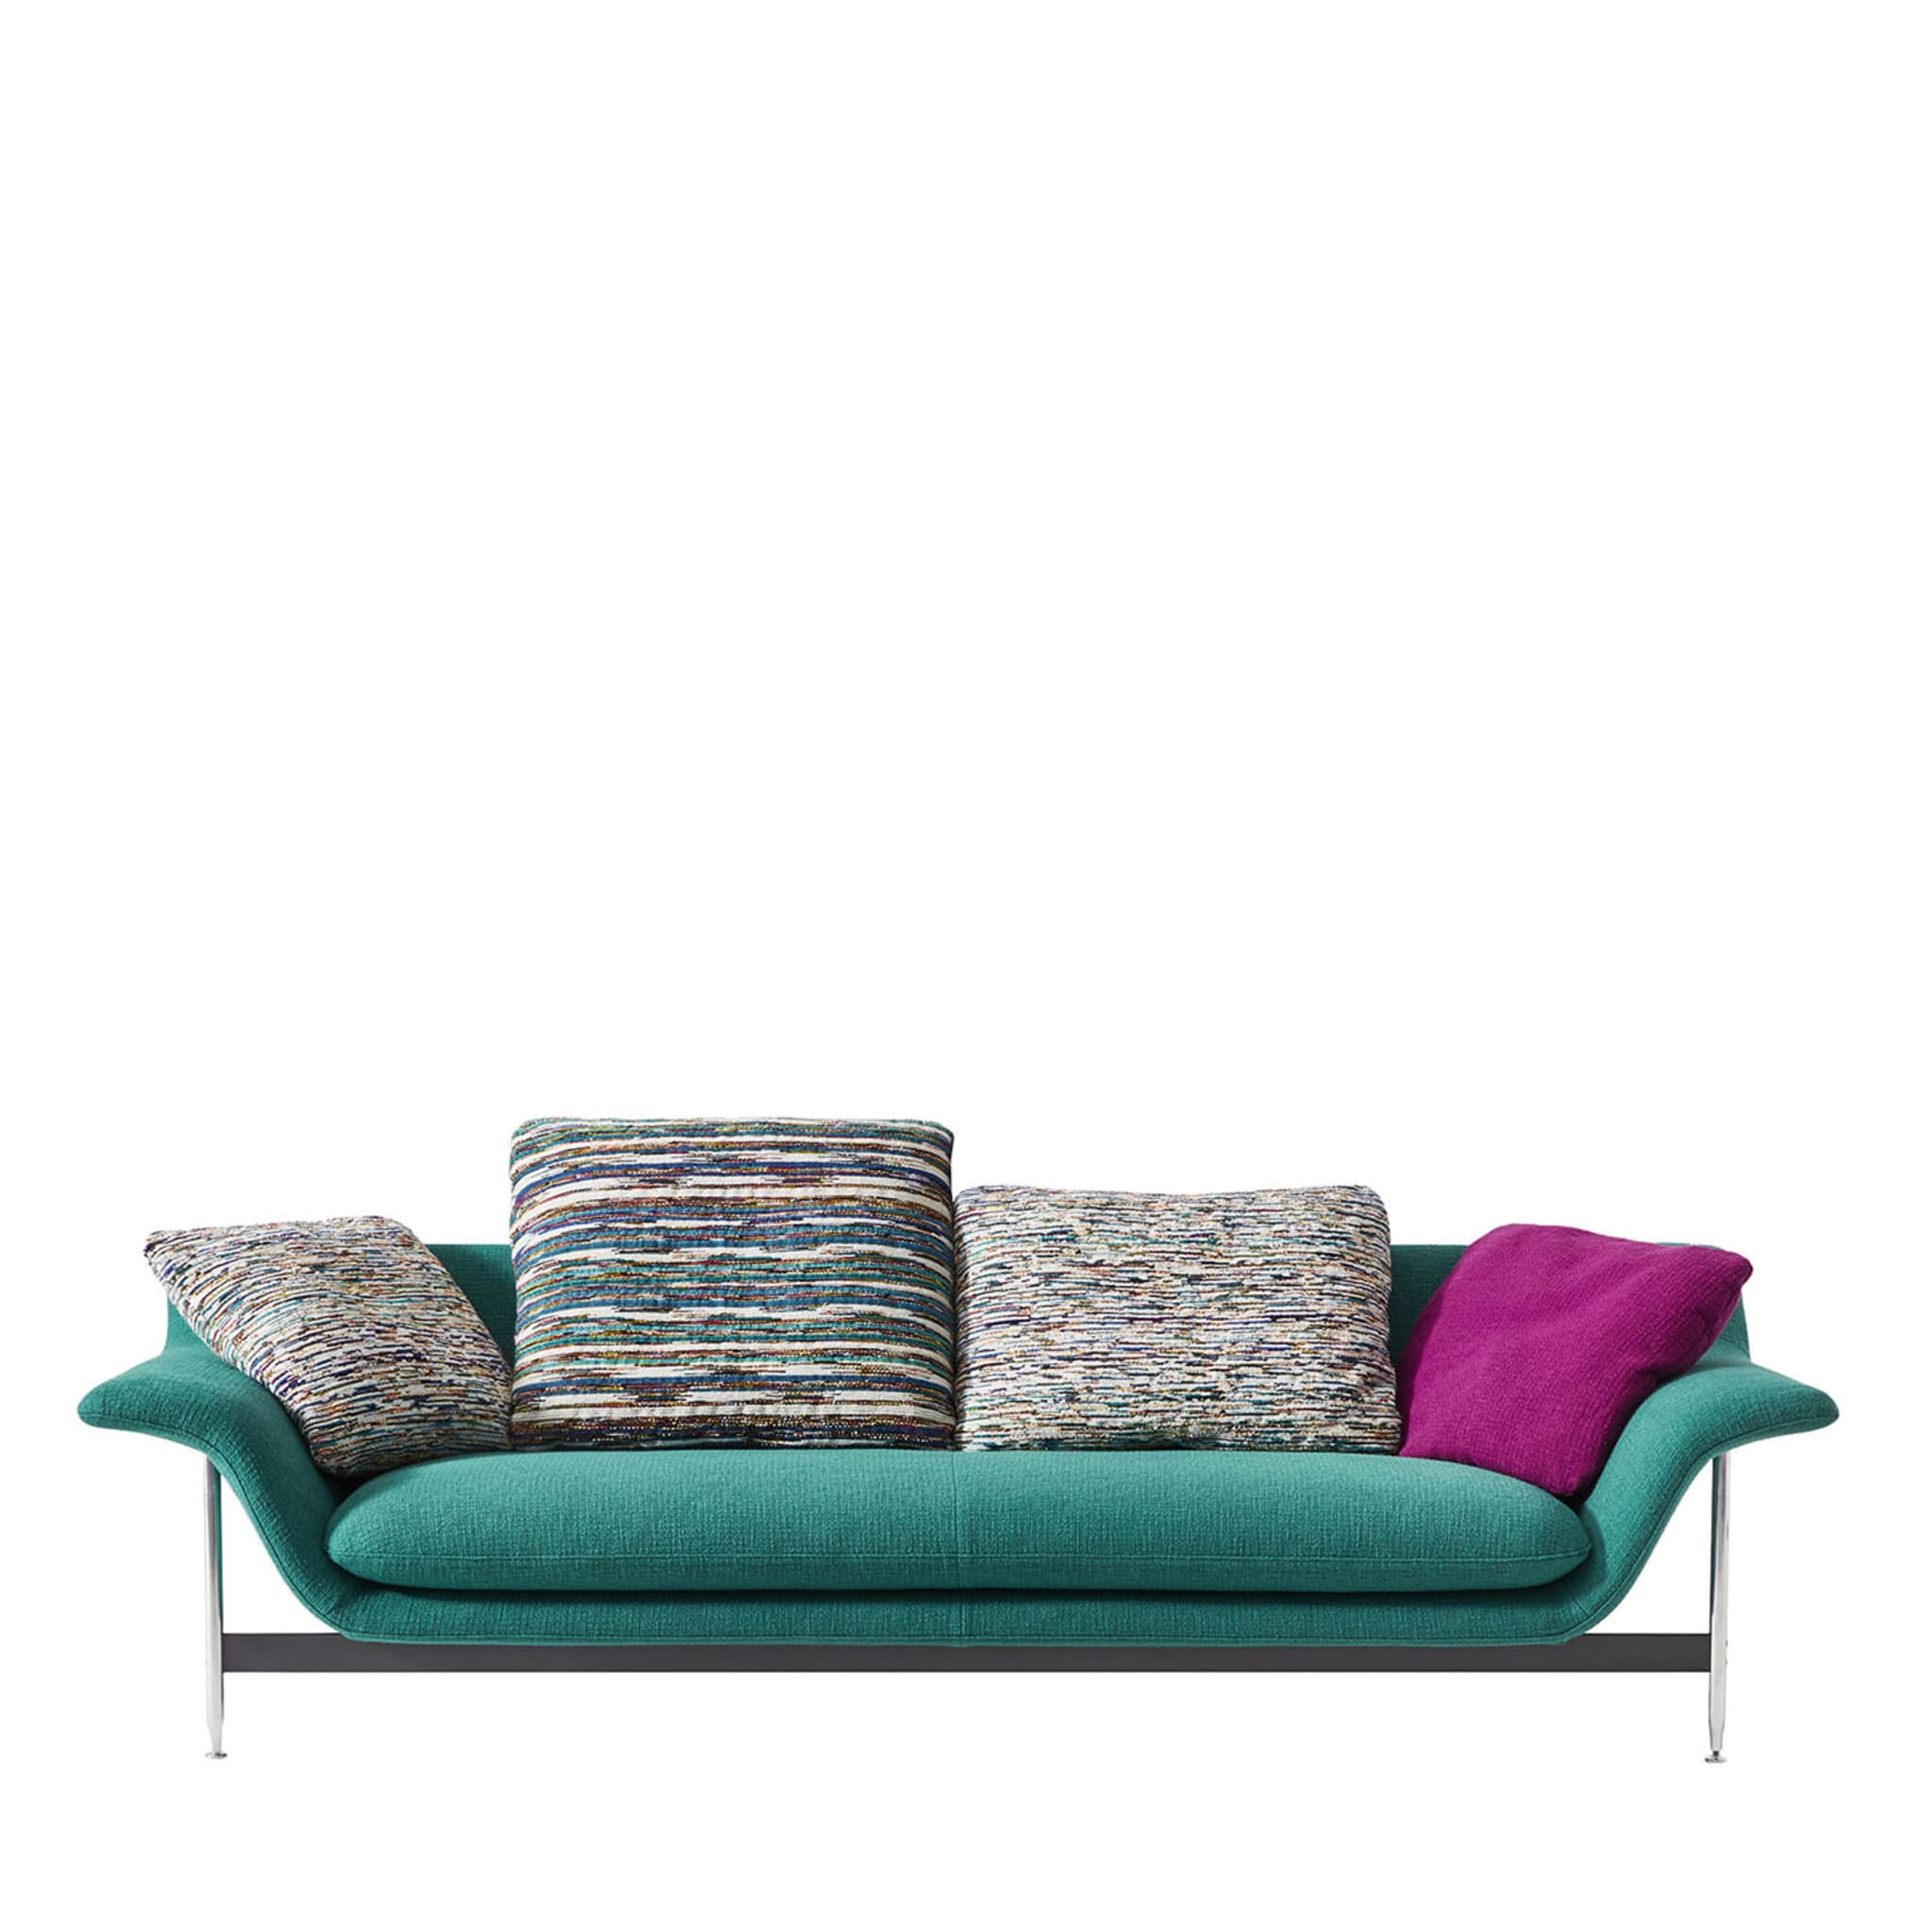 Esosoft 3-Seater Turquoise Sofa by Antonio Citterio - Main view